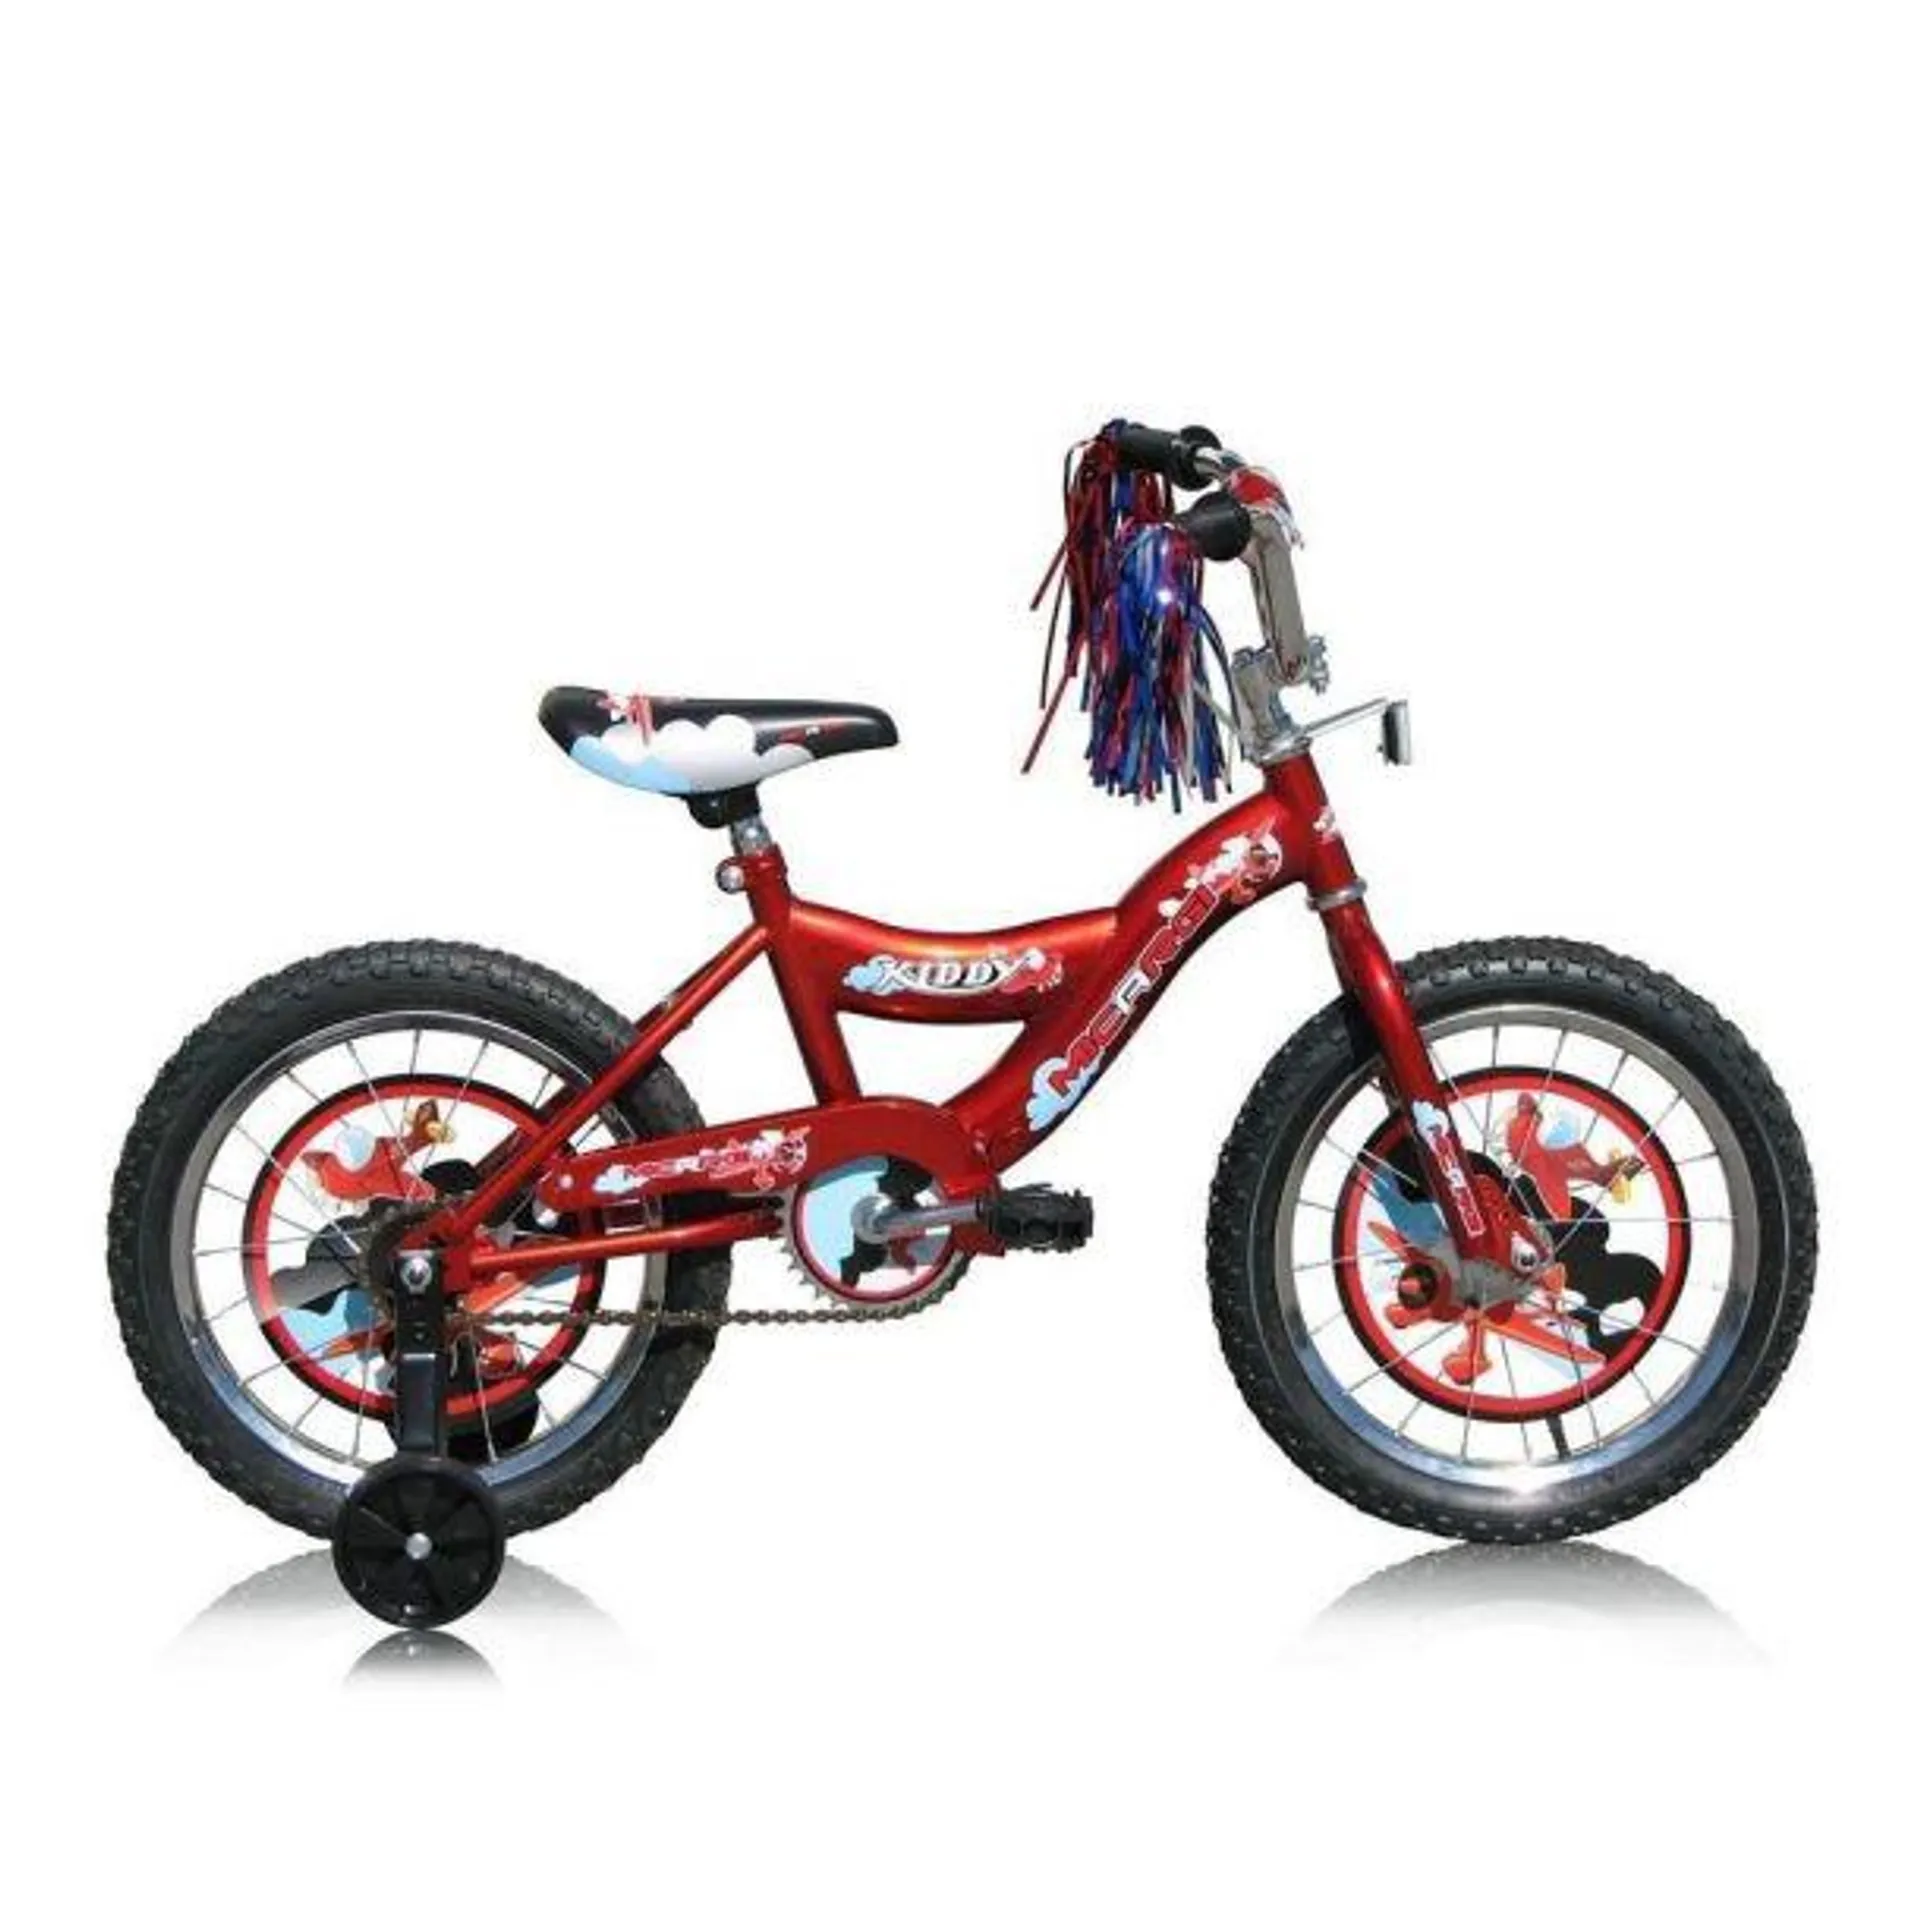 Micargi Kiddy Boys 16" Bike with Training Wheels - Red